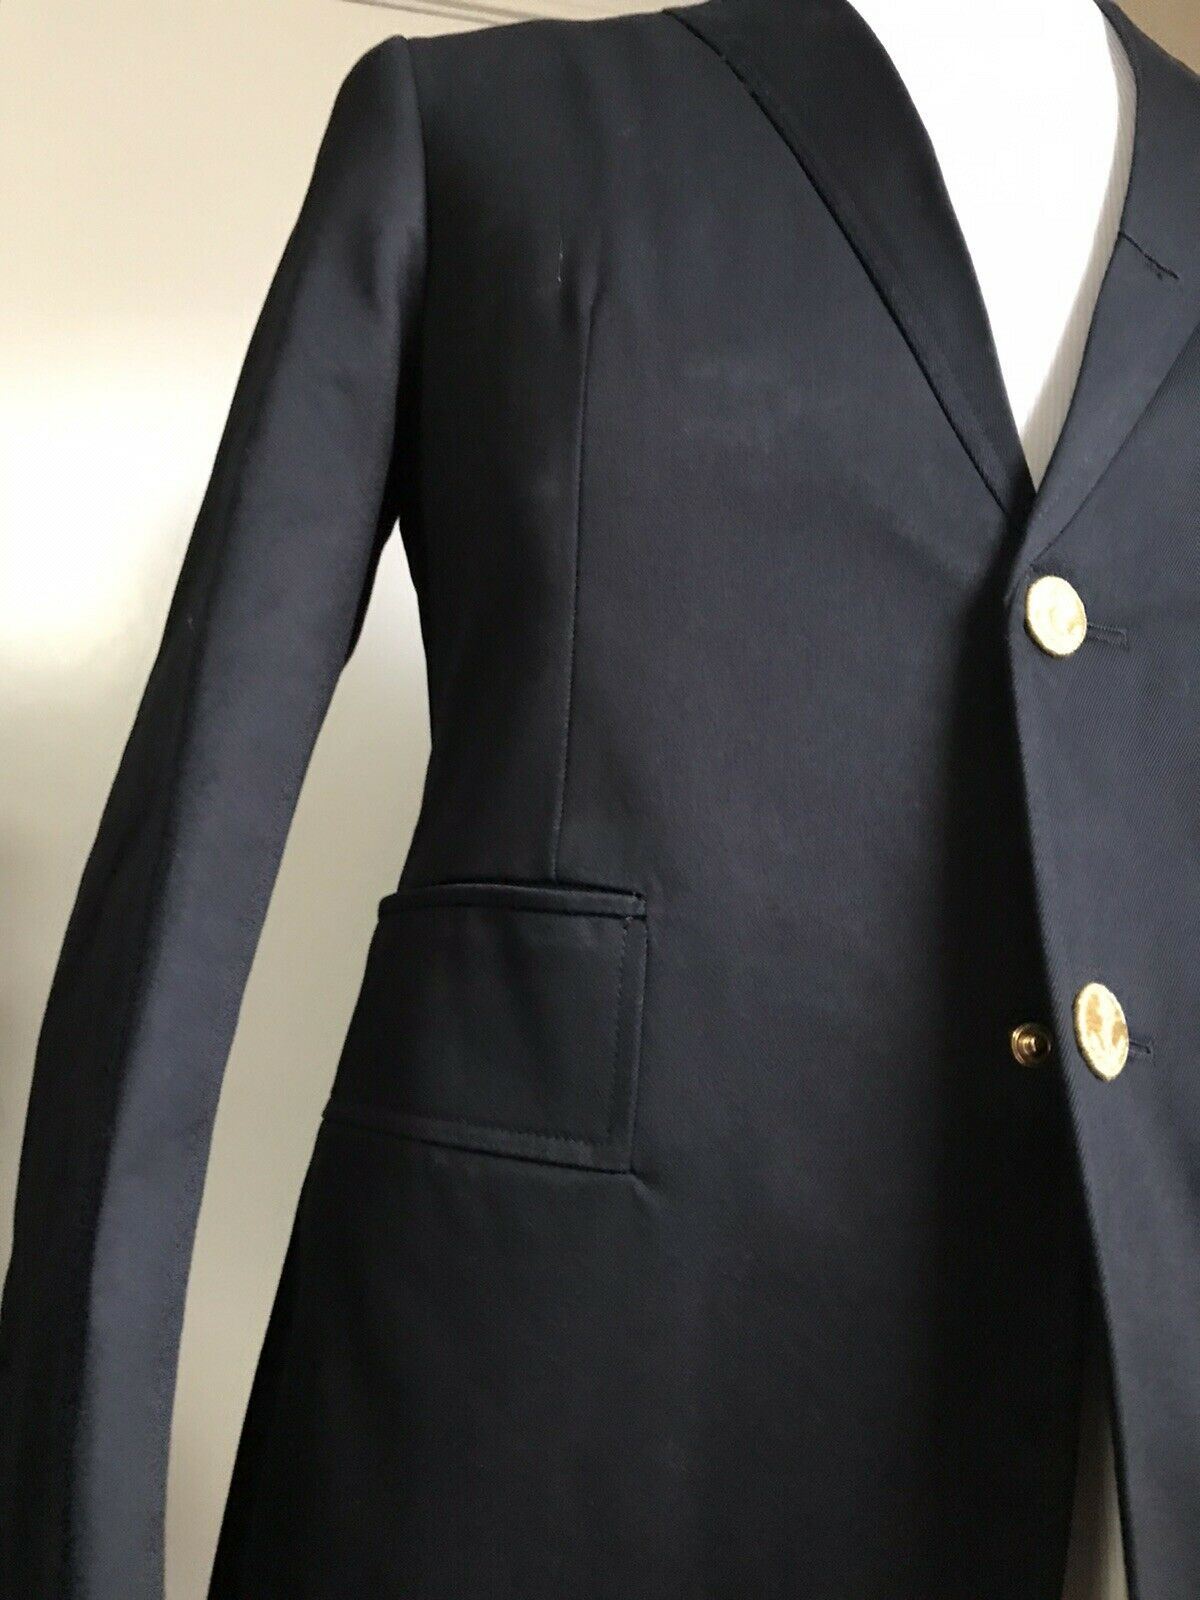 NWT $1950 Thom Browne Men Sport Coat Jacket Blazer Black Size 1 ( S ) Japan